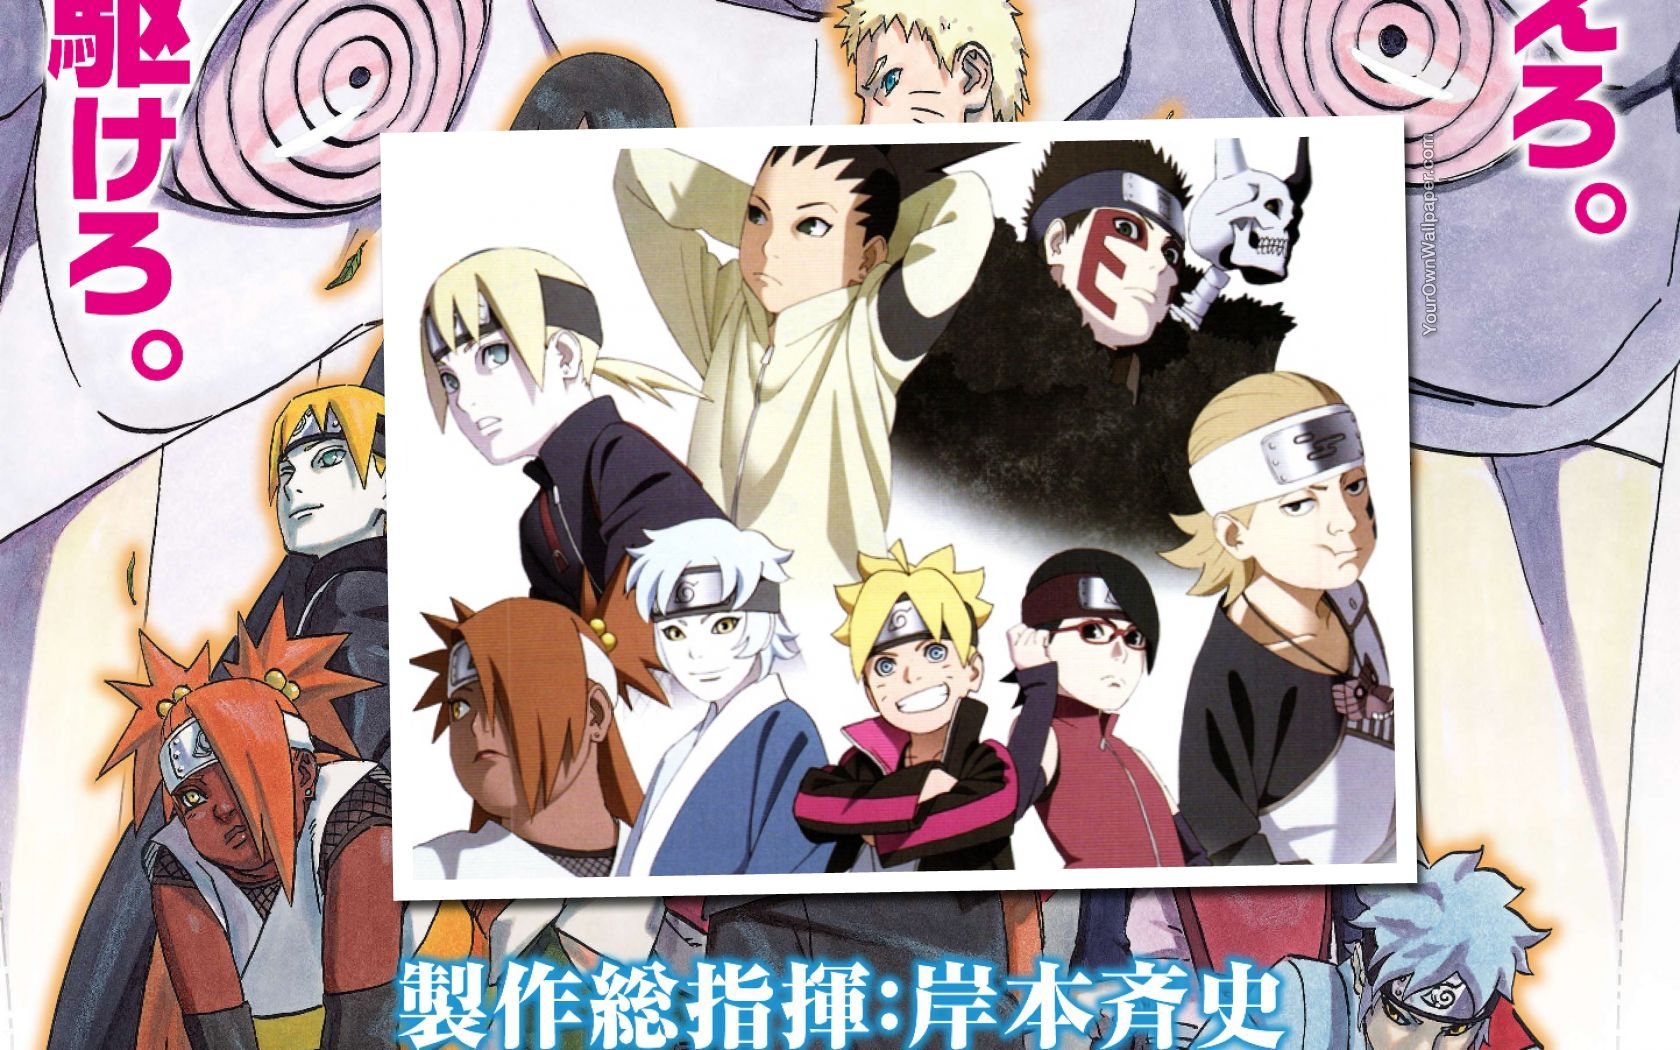 Boruto Naruto The Movie Wallpaper 6 by weissdrum on